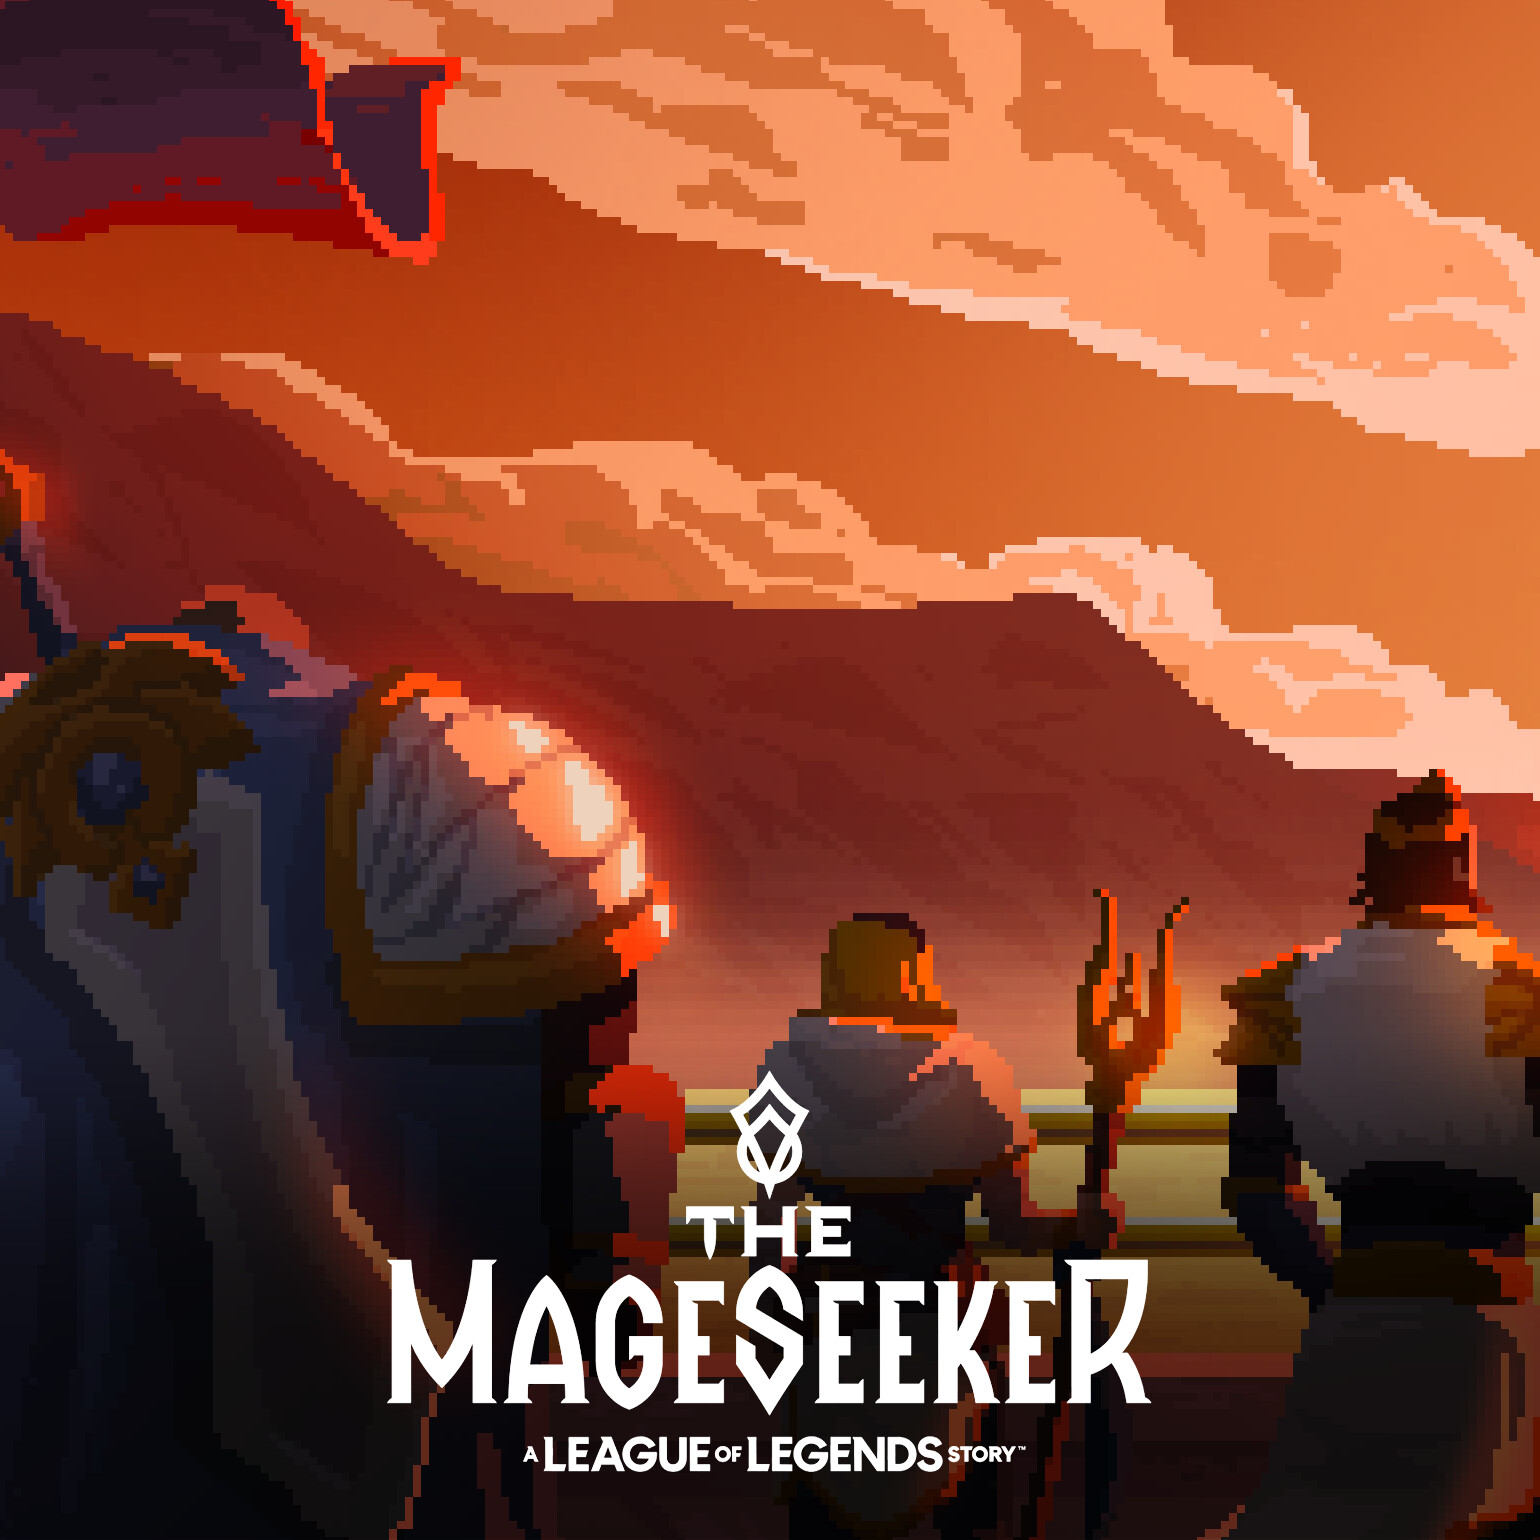 ArtStation - The Mageseeker: A League of Legends Story